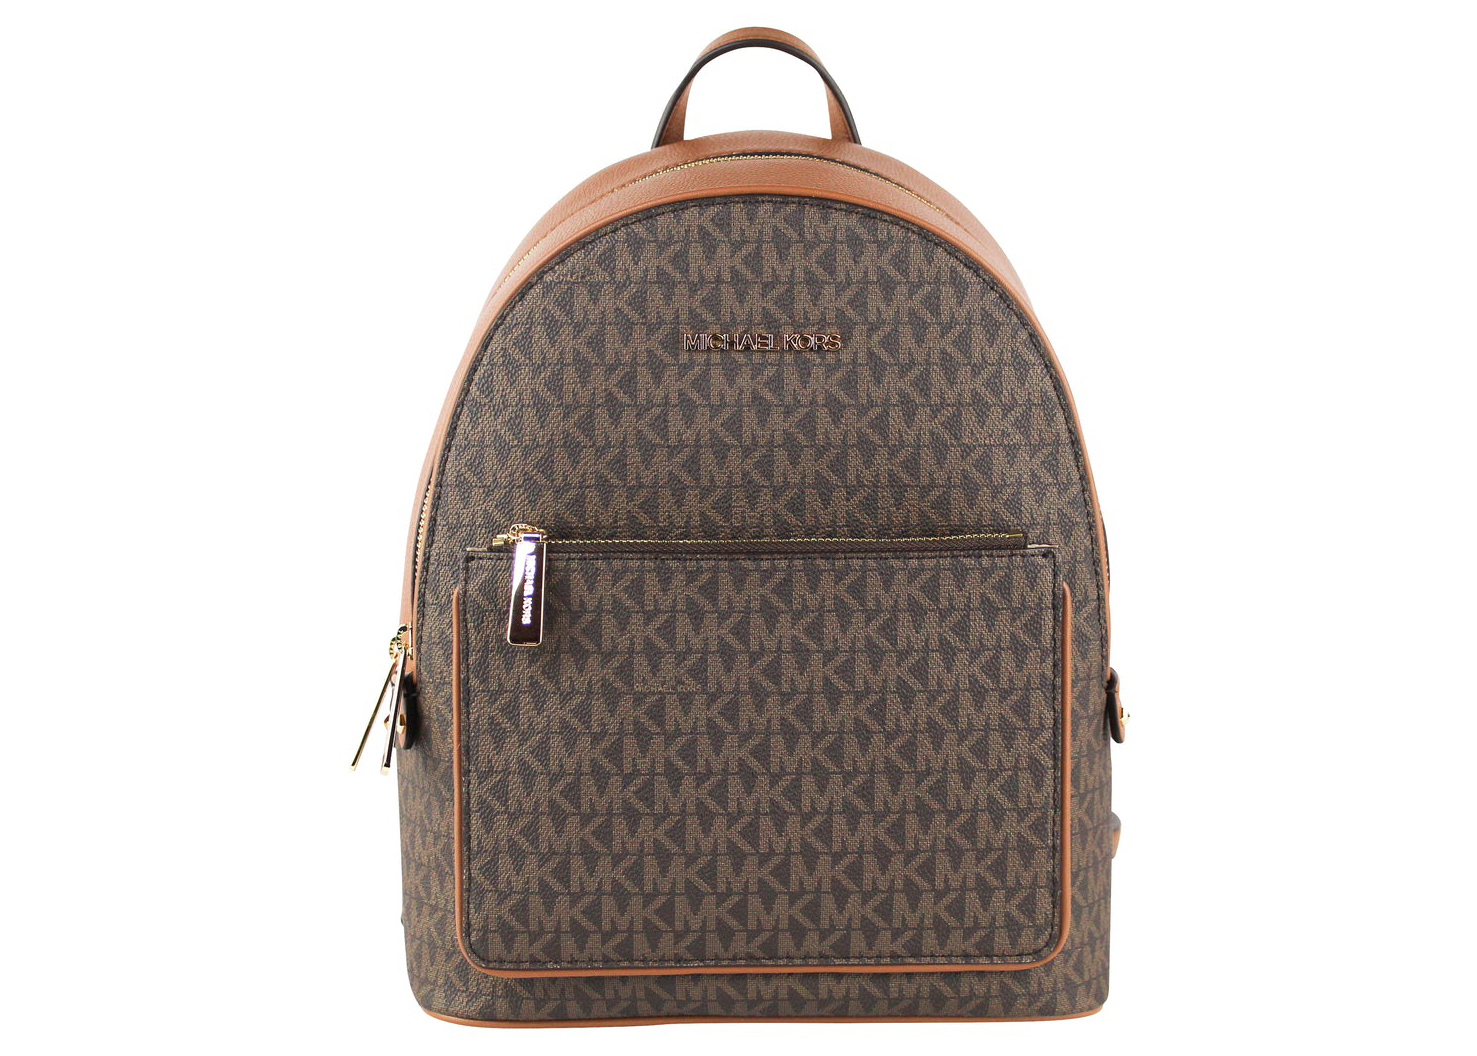 Michael Kors Adina Signature Backpack Medium Brown in PVC/Leather 